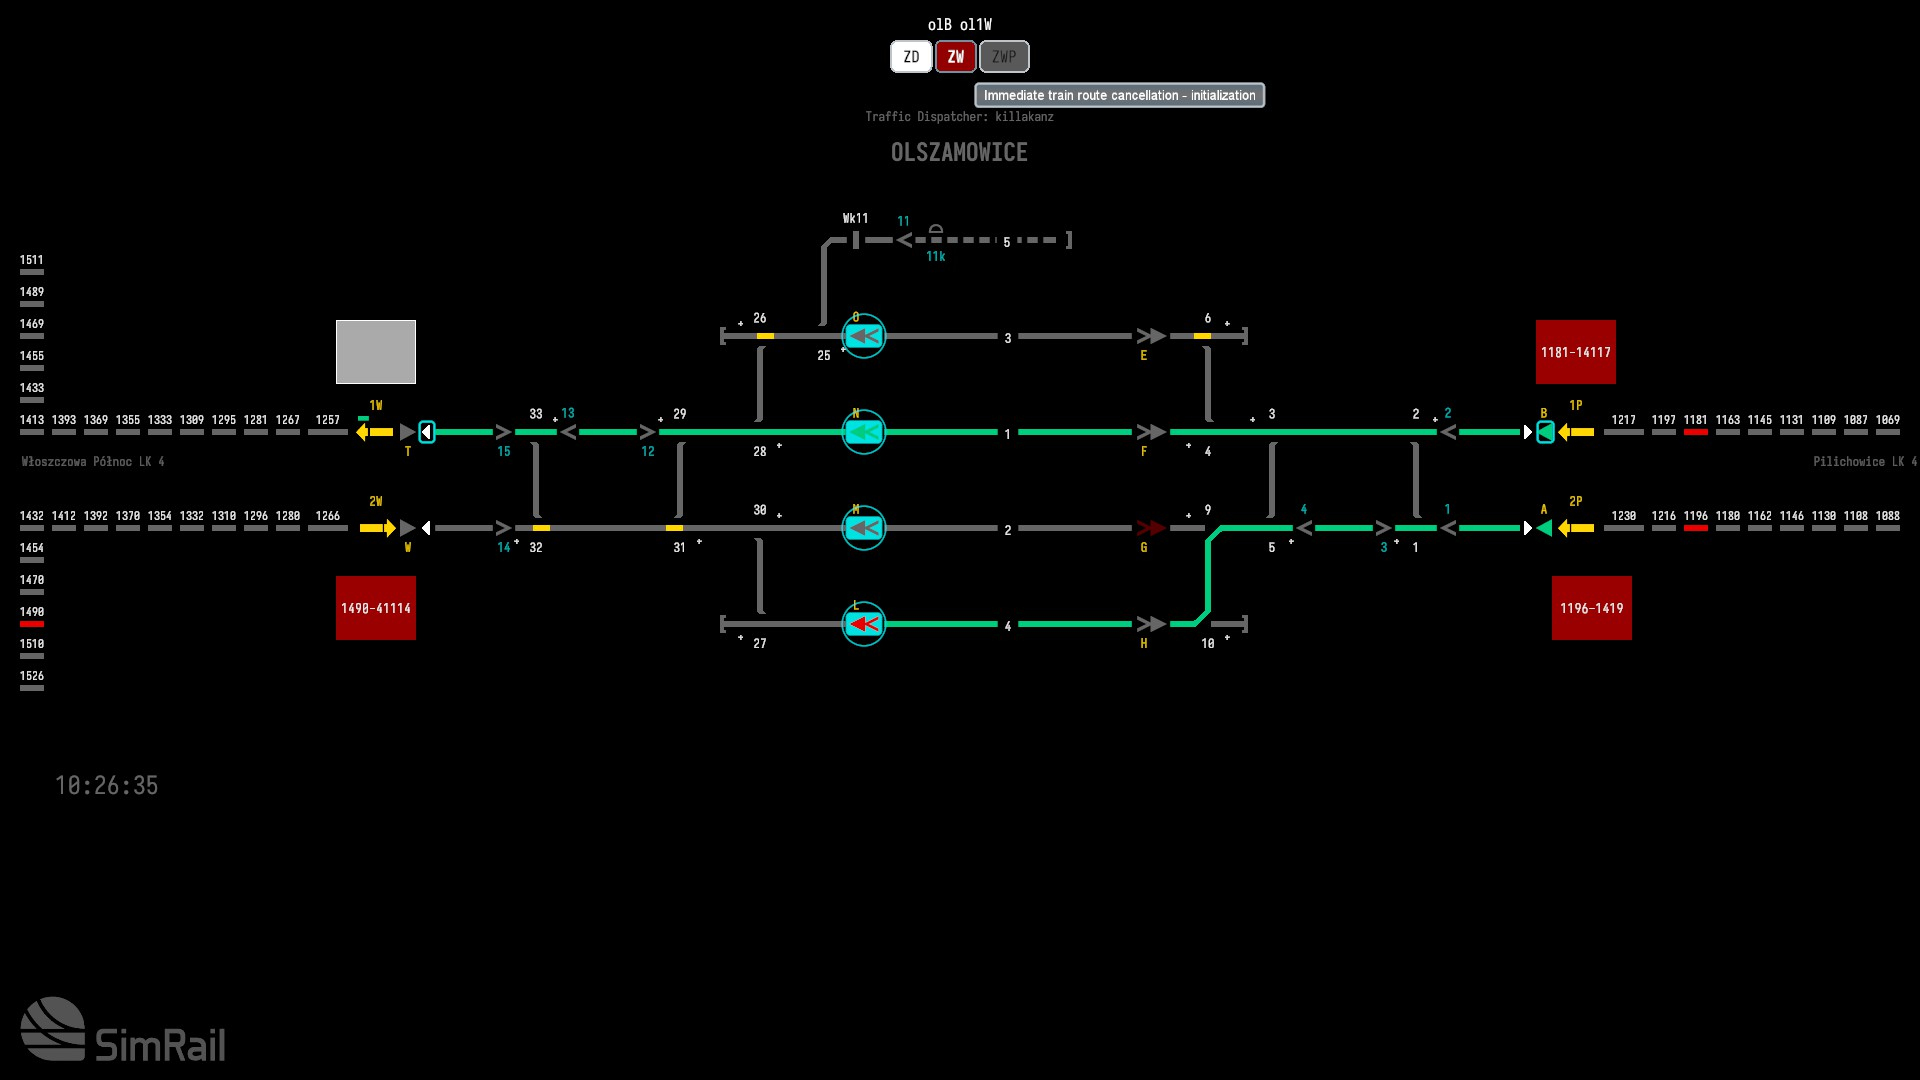 SimRail - The Railway Simulator - Basic Dispatching Full Guide - Computerised signalling - A64D12C